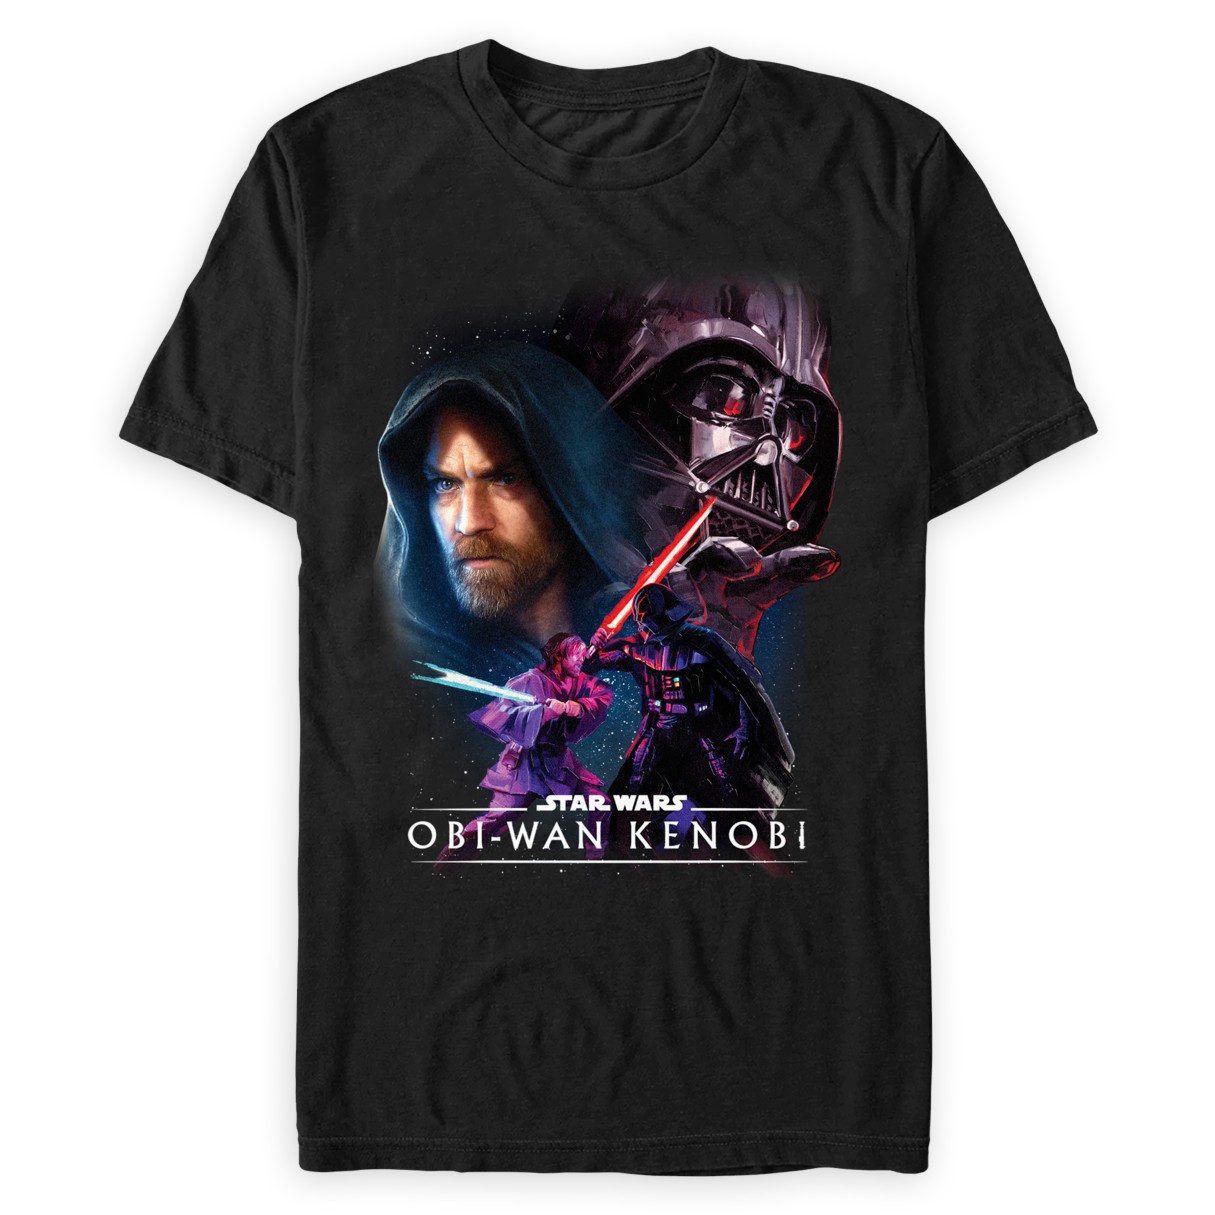 Obi-Wan Kenobi and Darth Vader T-Shirt for Adults – Star Wars: Obi-Wan Kenobi